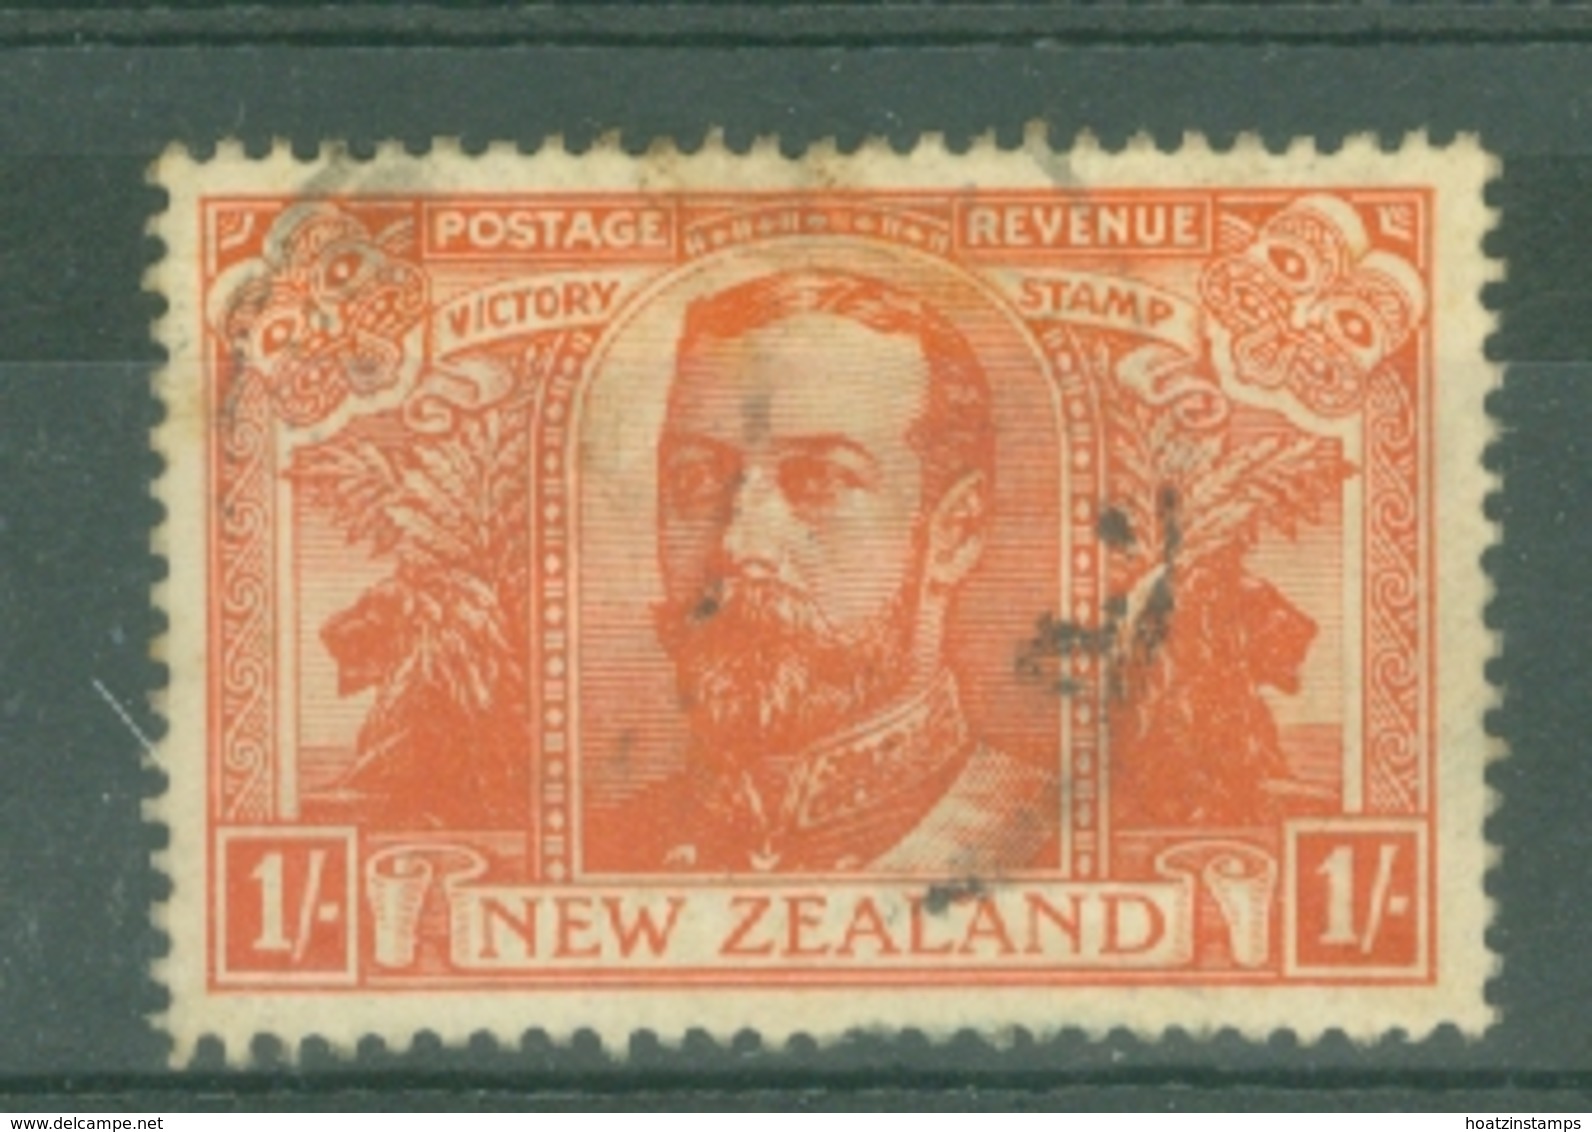 New Zealand: 1920   Victory     SG458     1/-    Used - Gebruikt